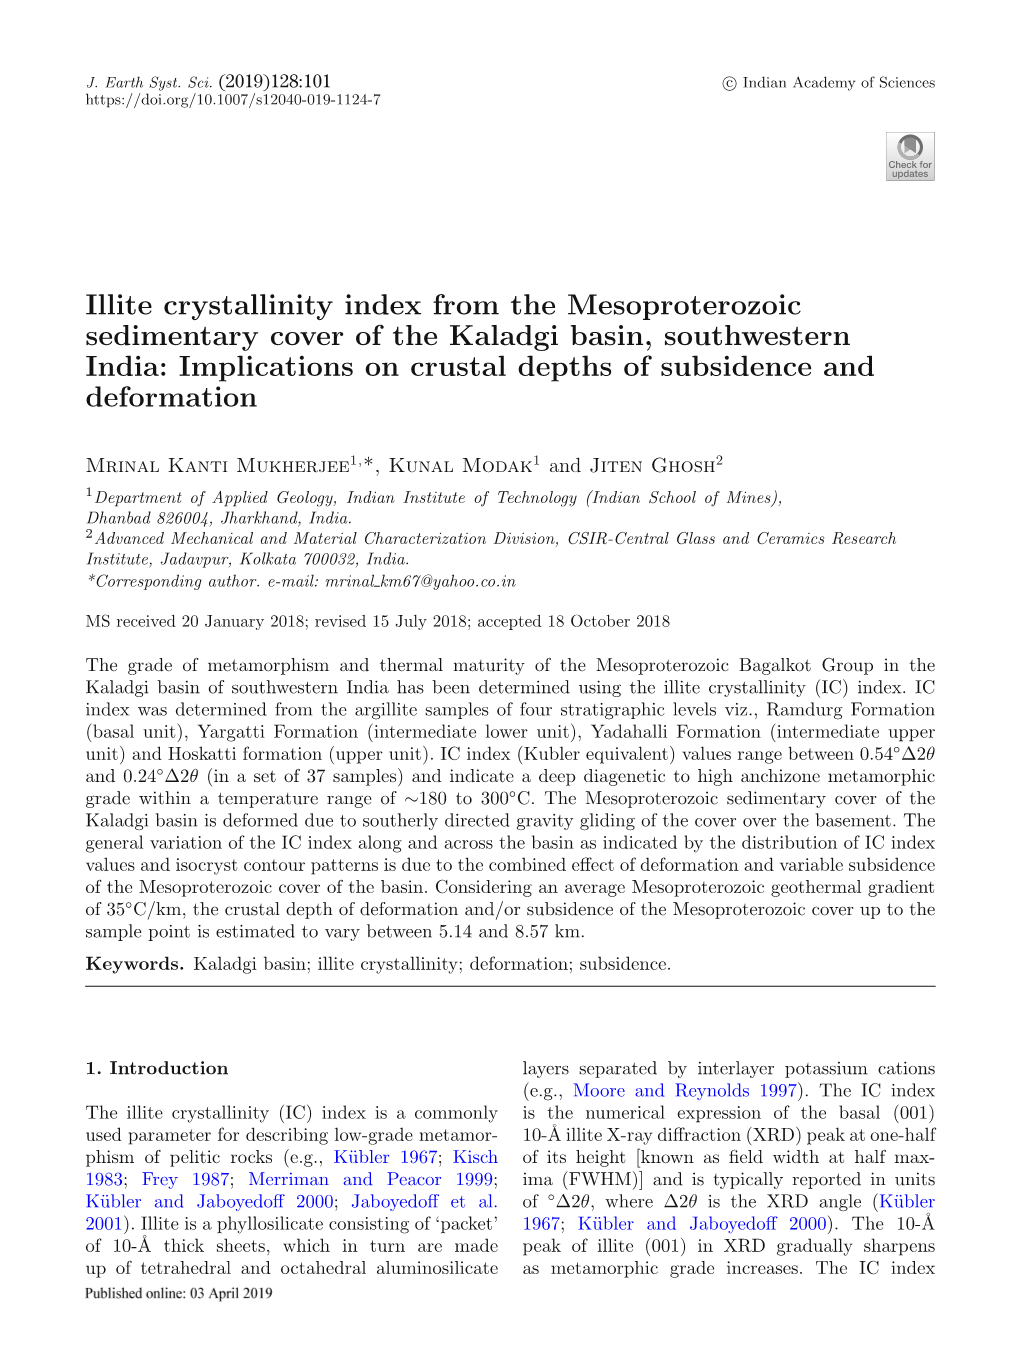 Illite Crystallinity Index from the Mesoproterozoic Sedimentary Cover of the Kaladgi Basin, Southwestern India